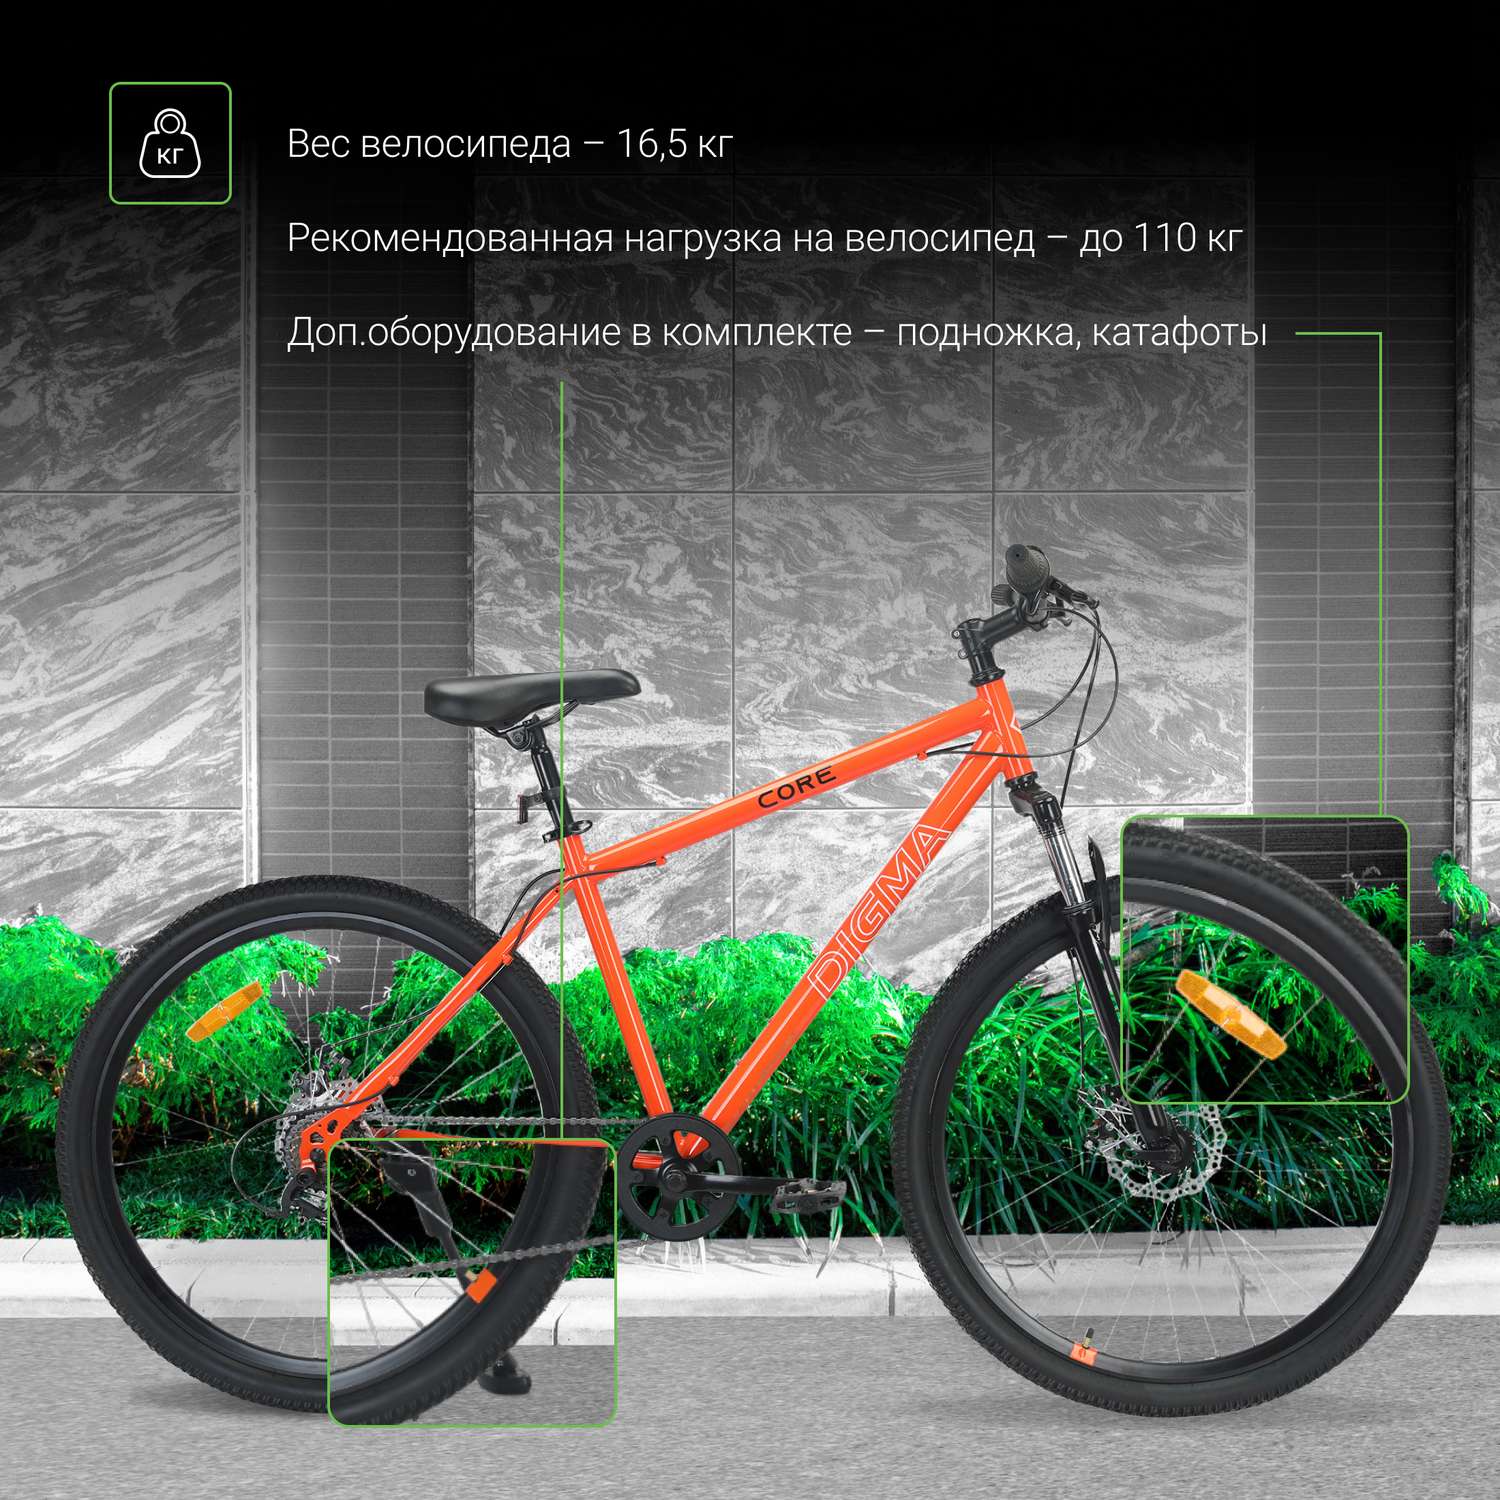 Велосипед Digma Core оранжевый - фото 3